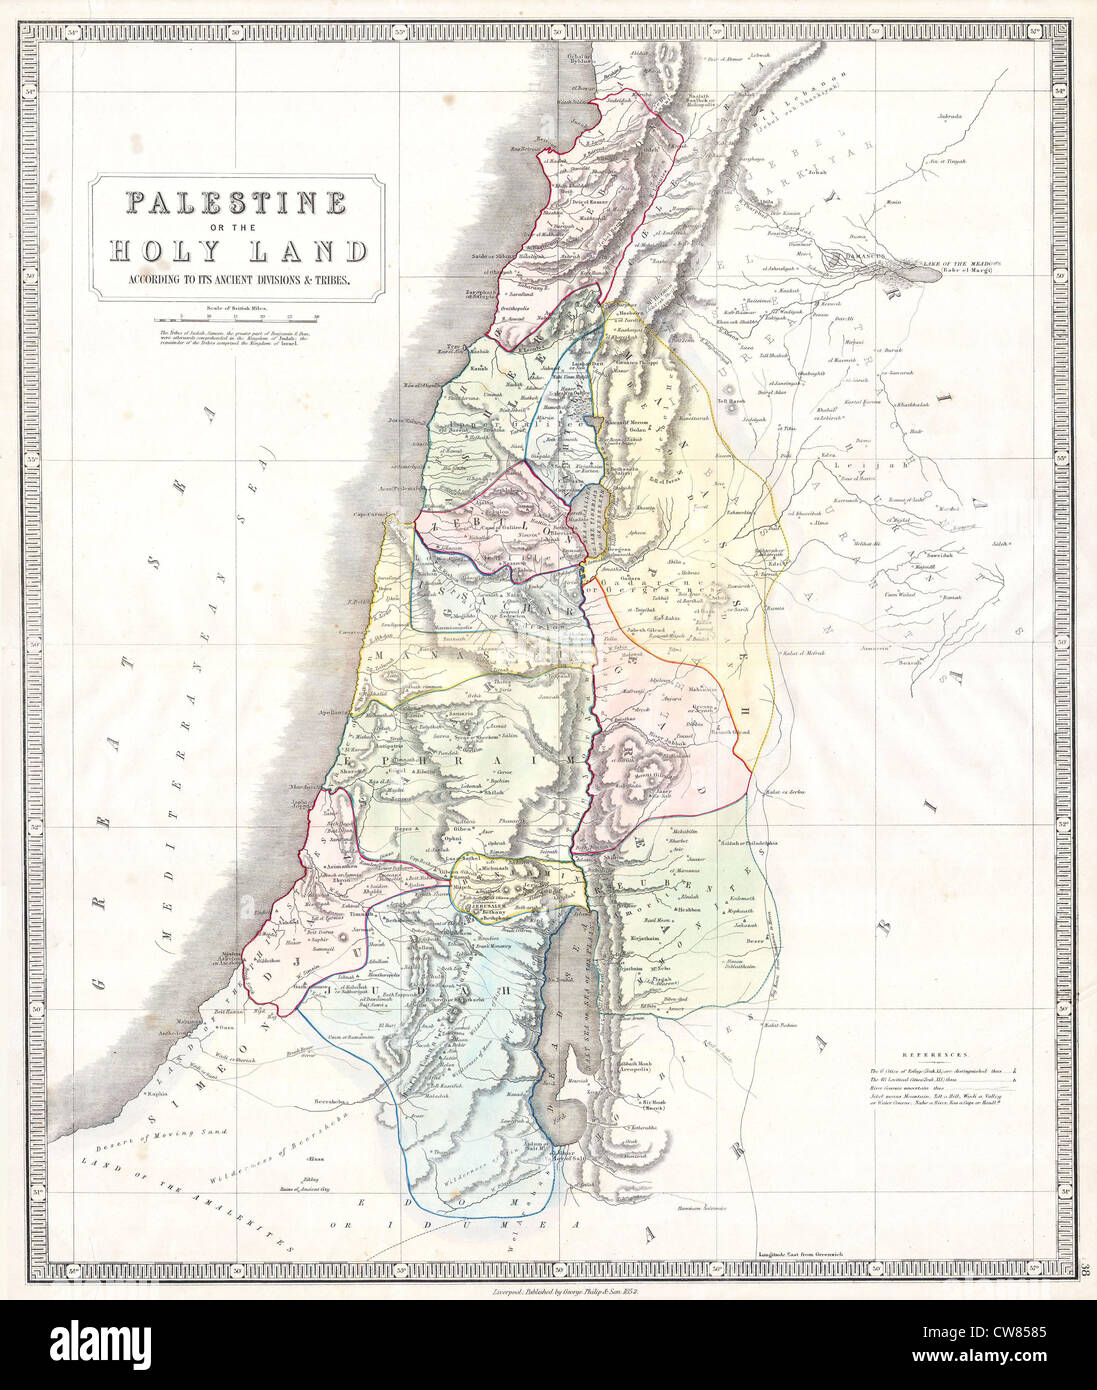 1852 Philip Map of Palestine - Israel - Holy Land - Stock Photo